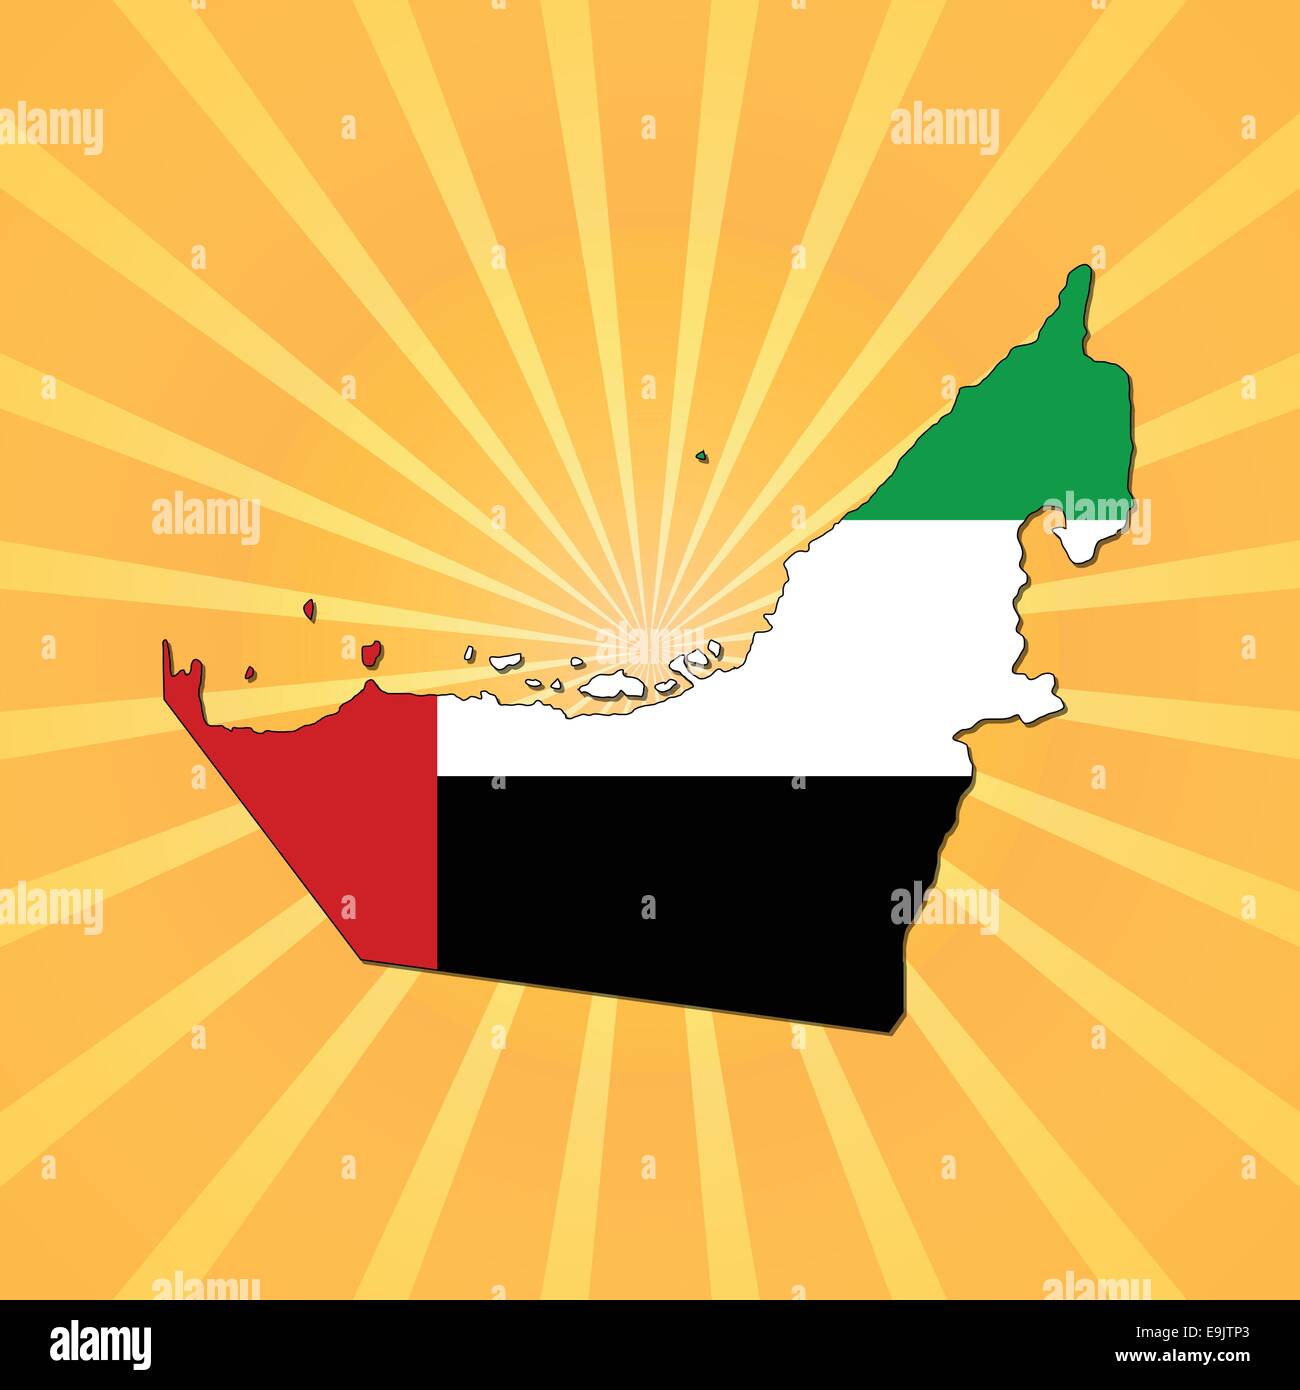 United Arab Emirates map flag on blue sunburst illustration Stock Vector